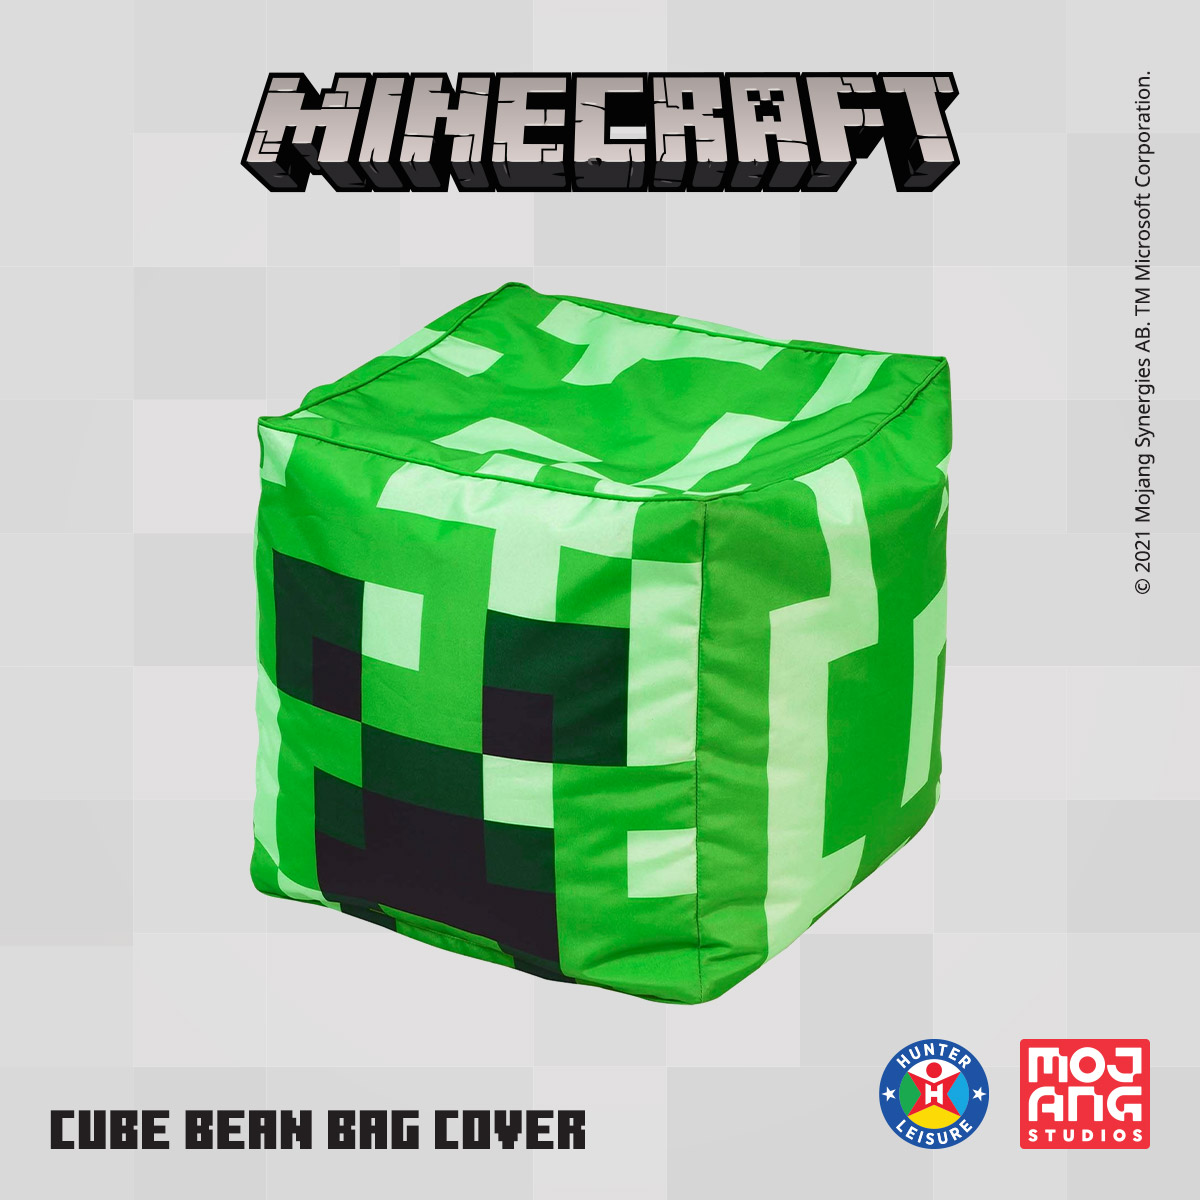 www.hunterleisure.com.au Minecraft Cube Bean Bag Cover Creeper Big W Hunter Leisure